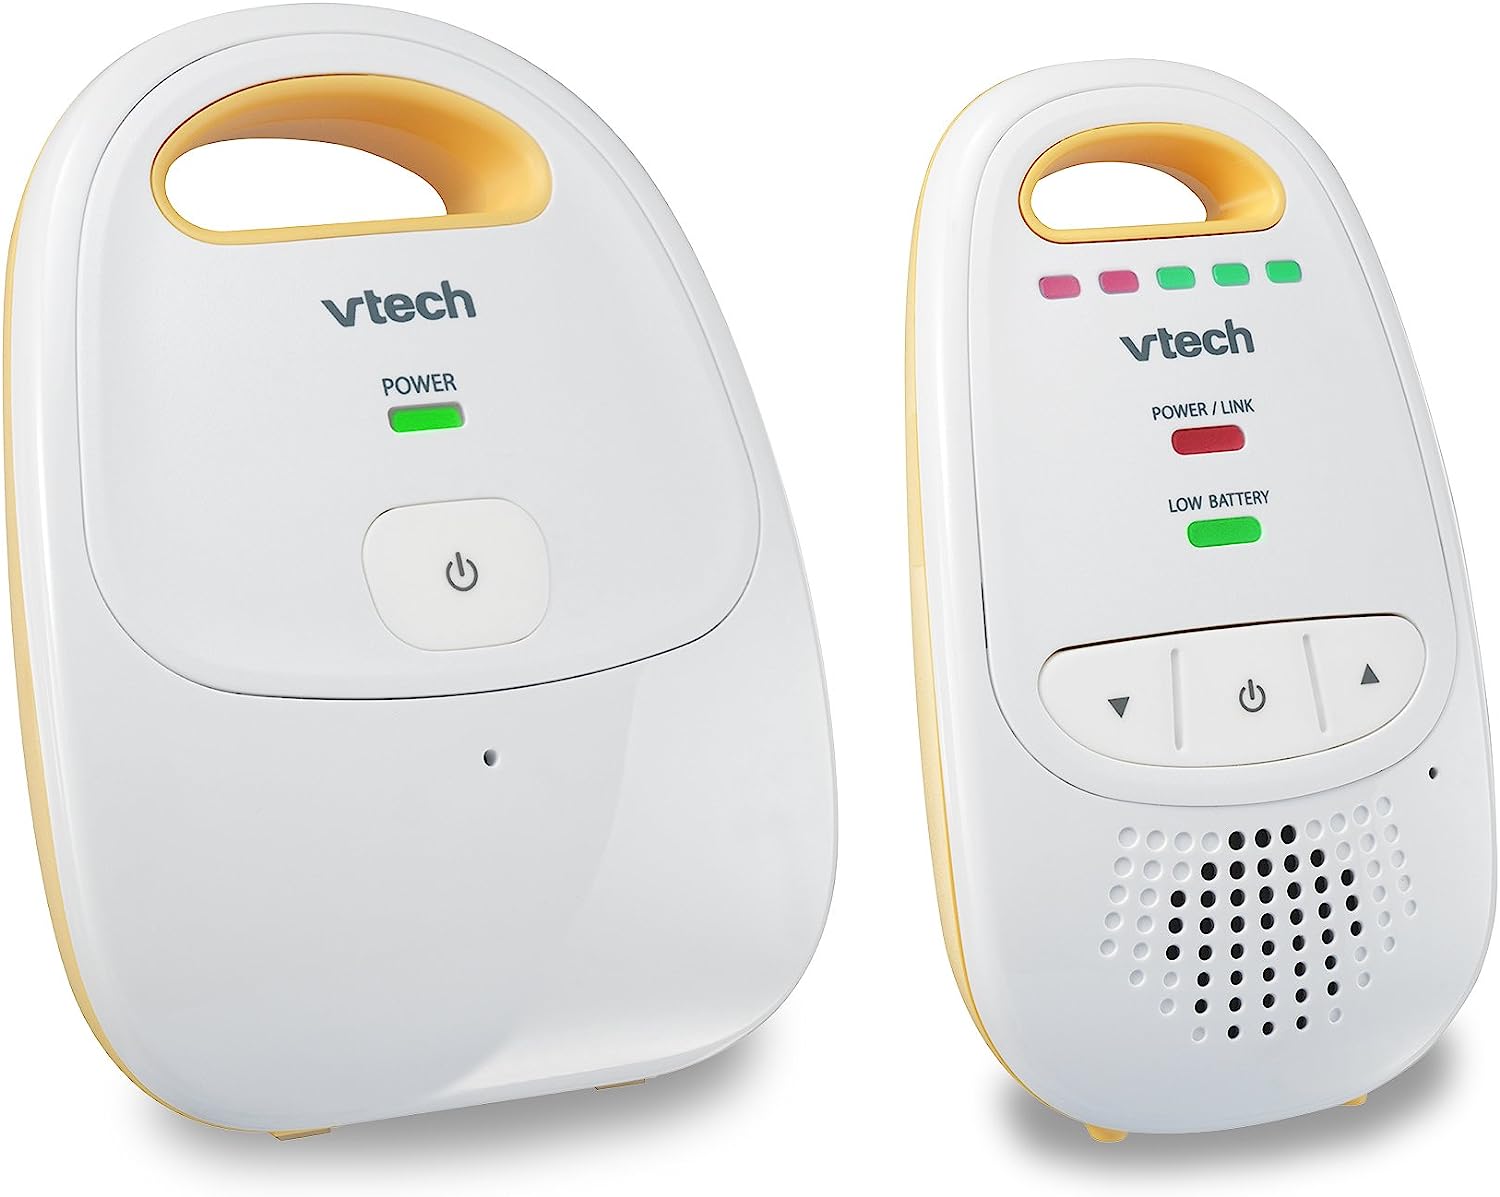 VTech DM111 Upgraded Audio Baby Monitor